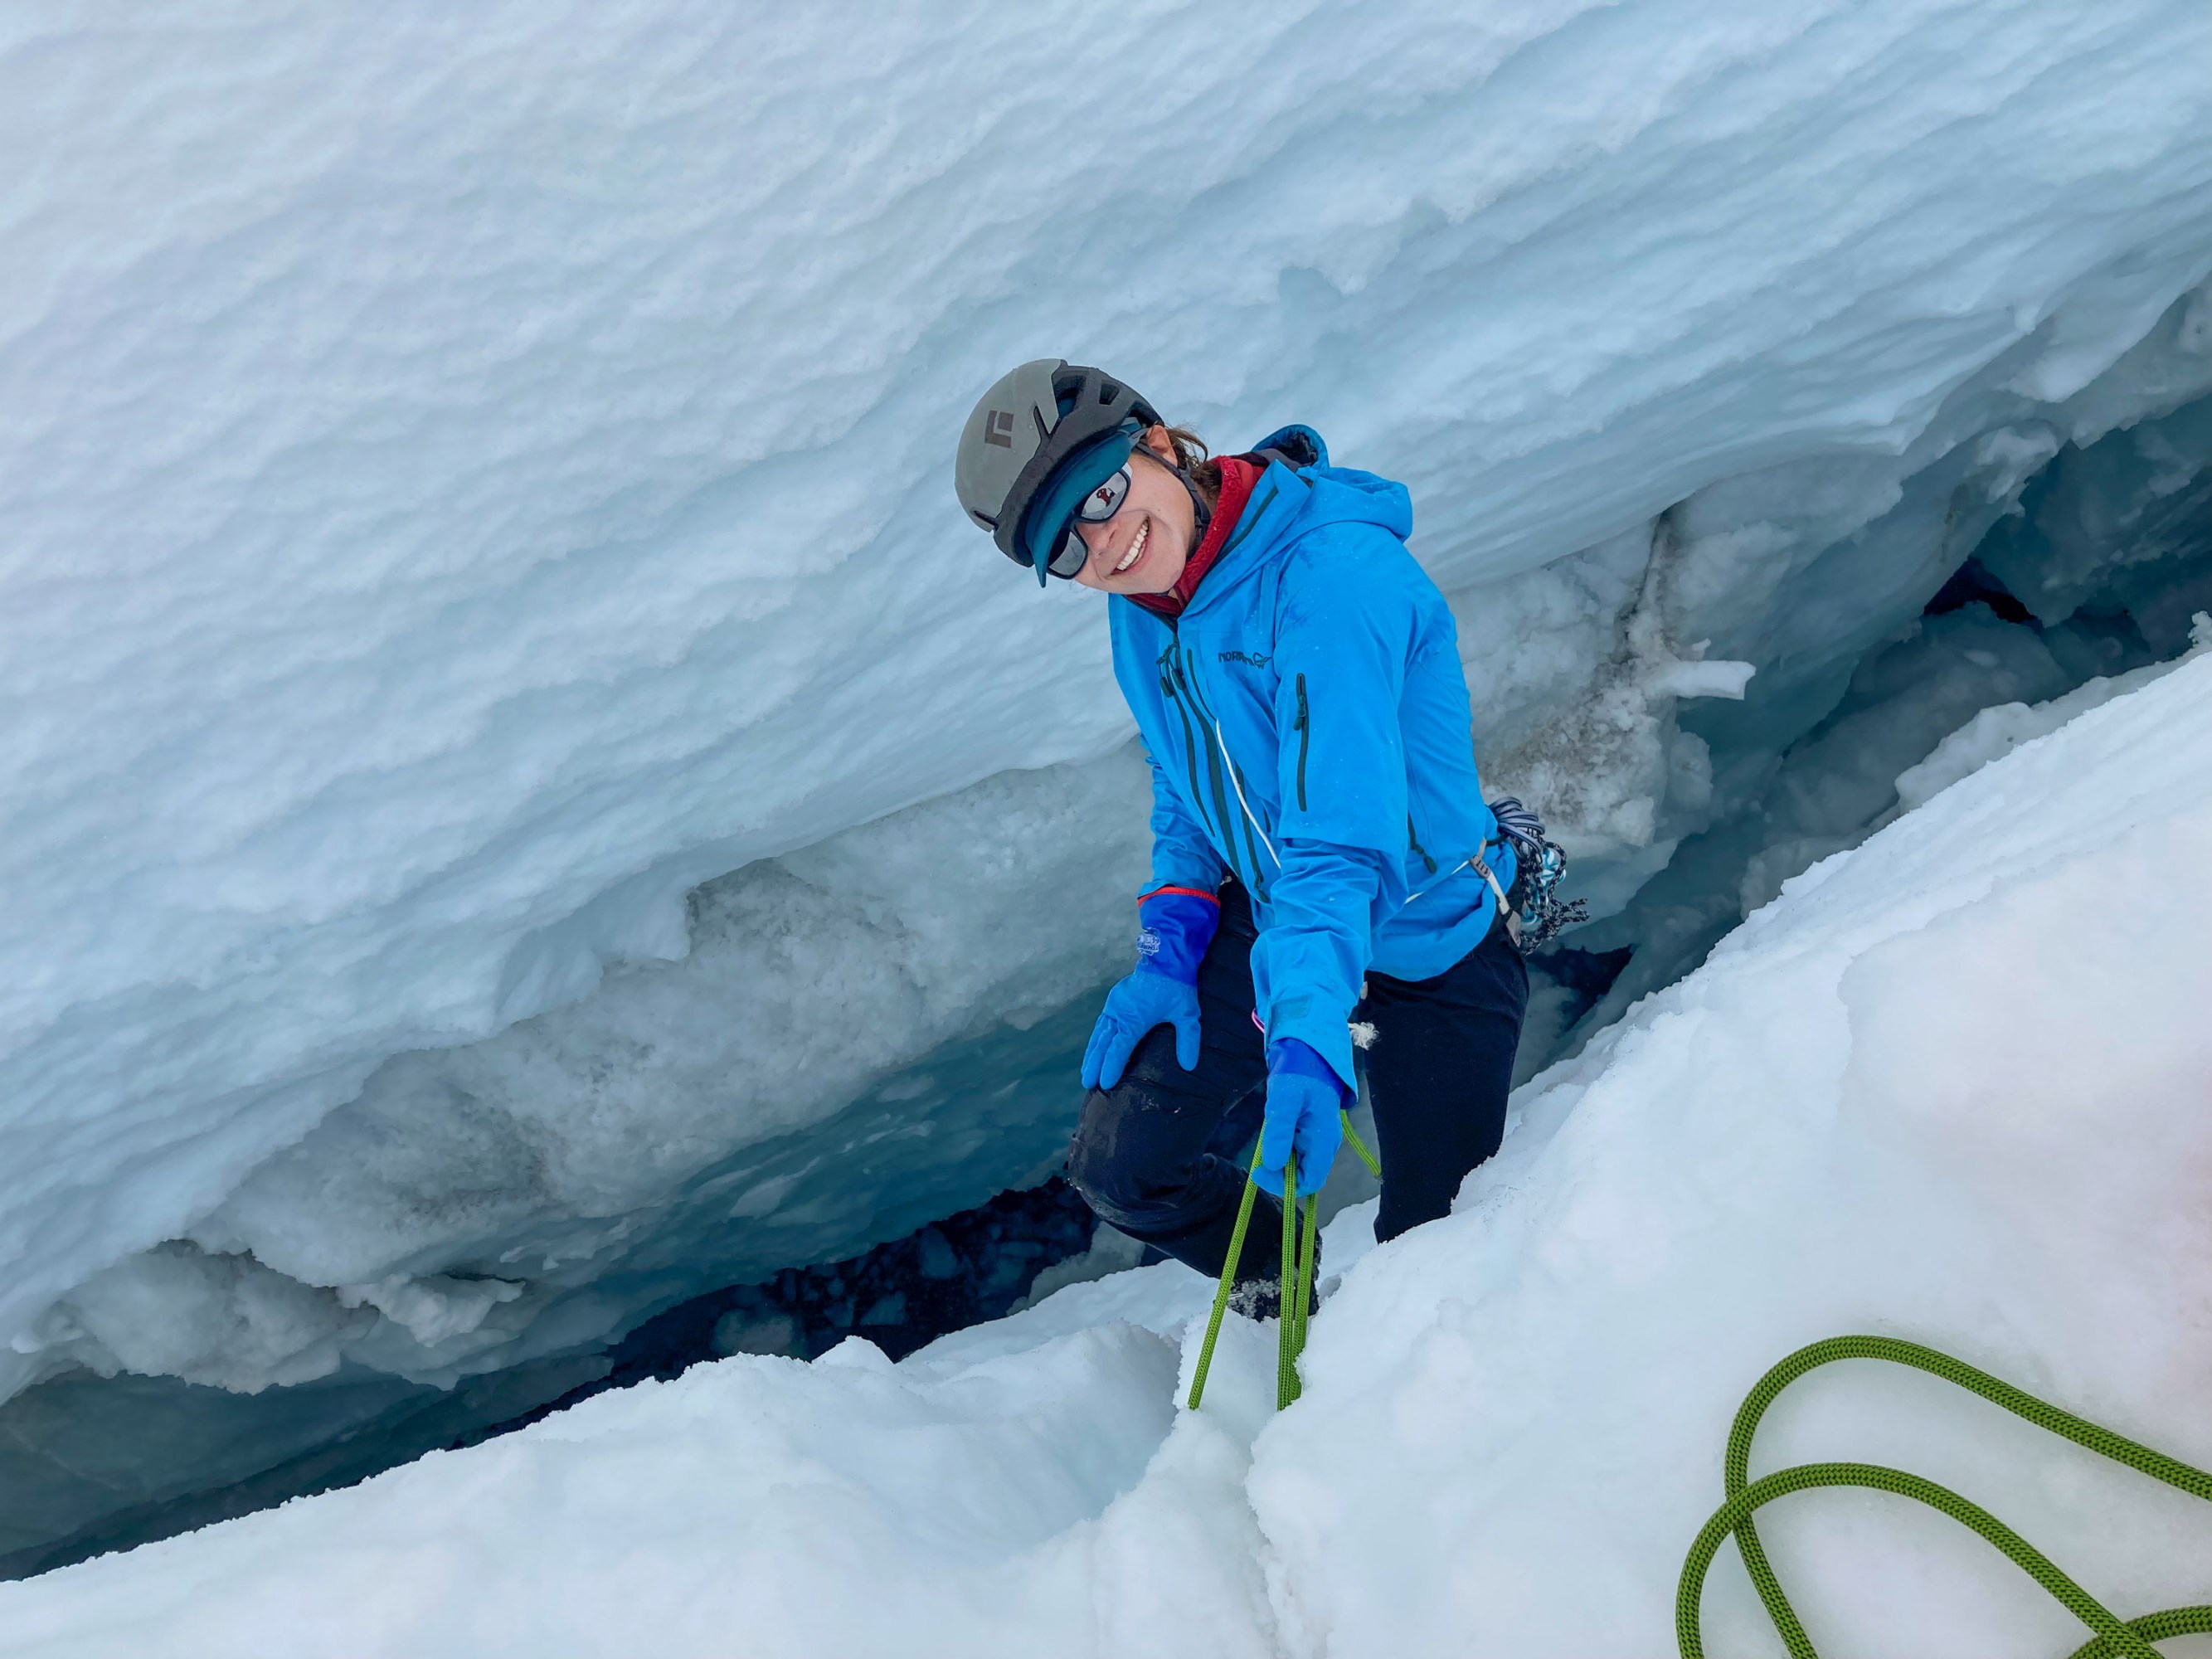 Joanna Millstein posing before descending into a crevasse